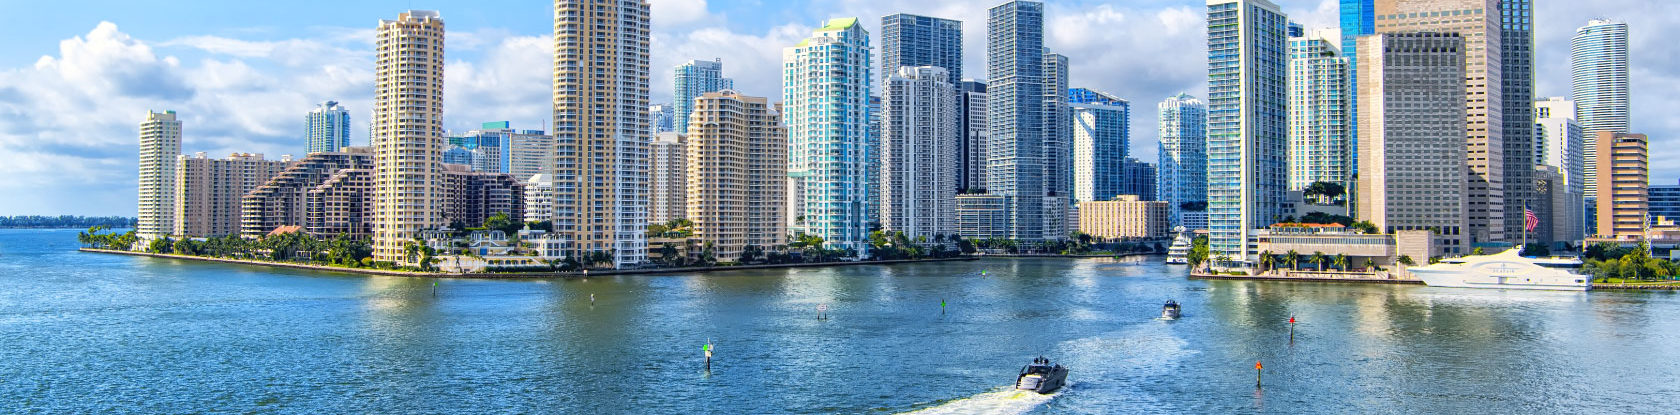 Miami Business Consulting - IT Consulting Miami